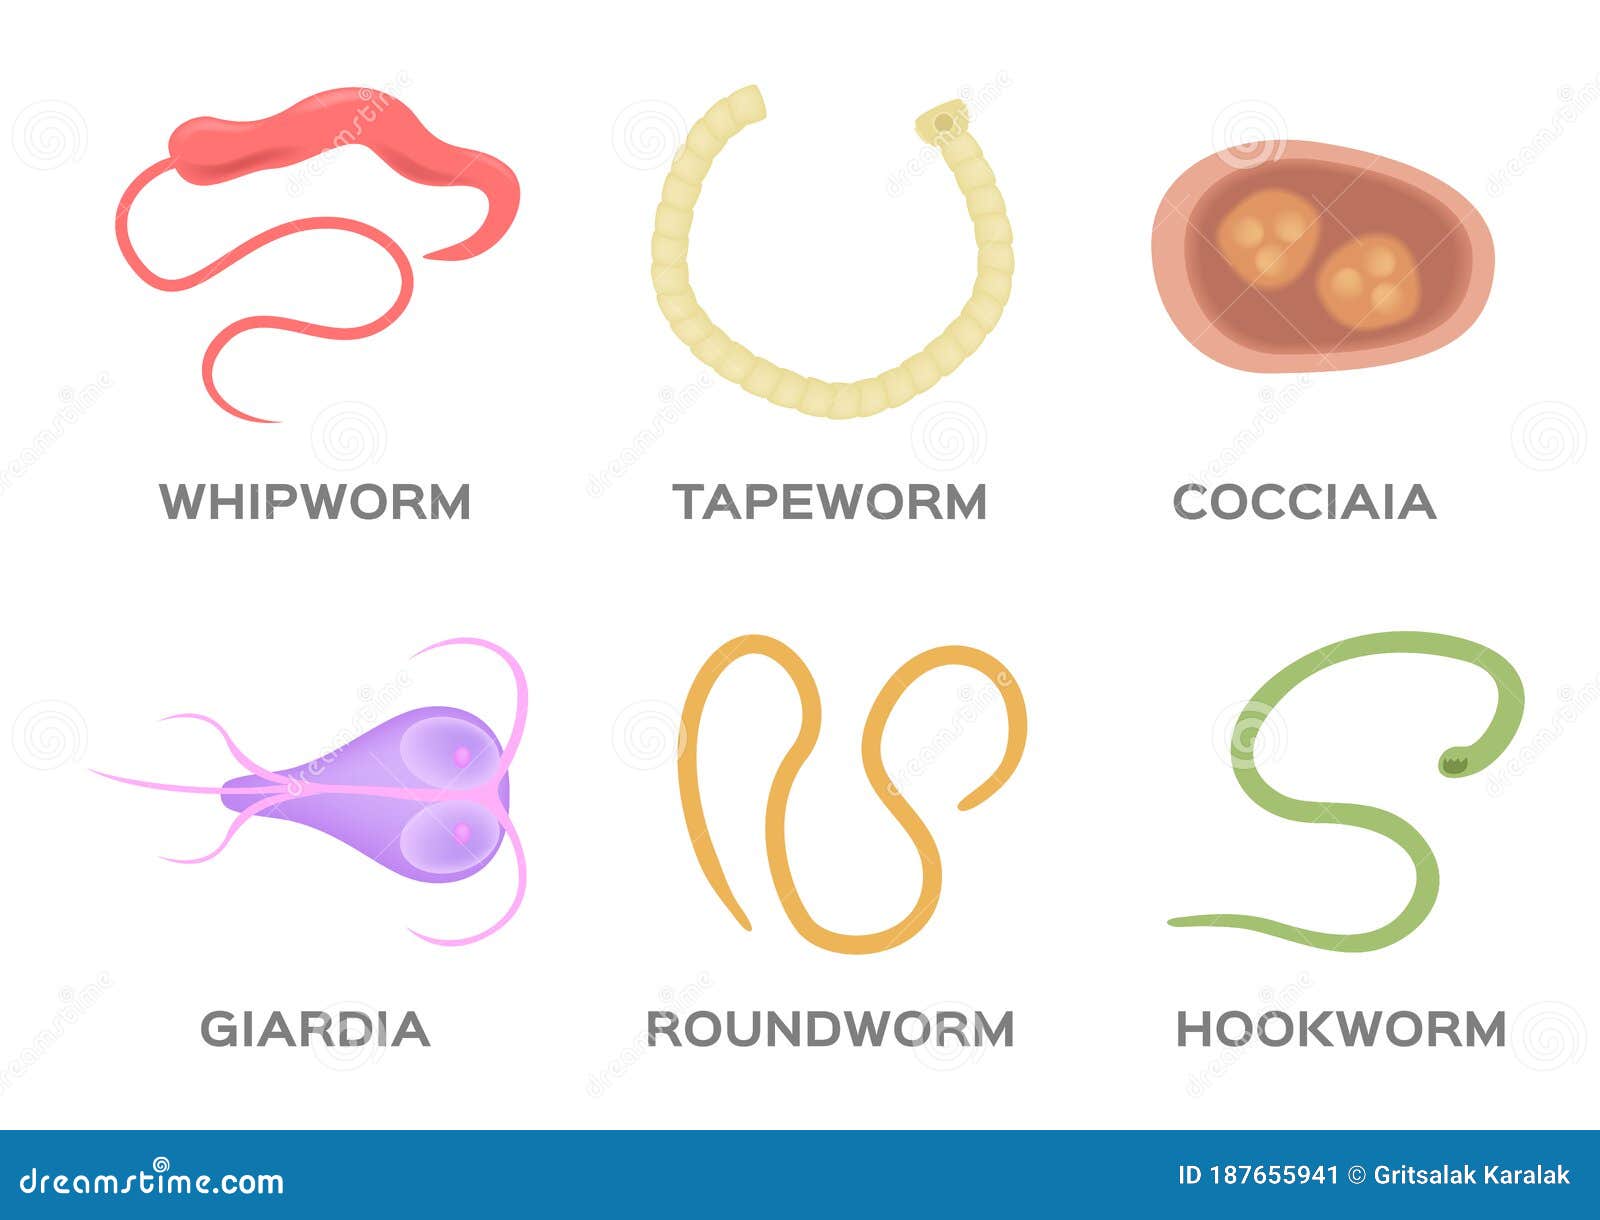 pinworm giardia